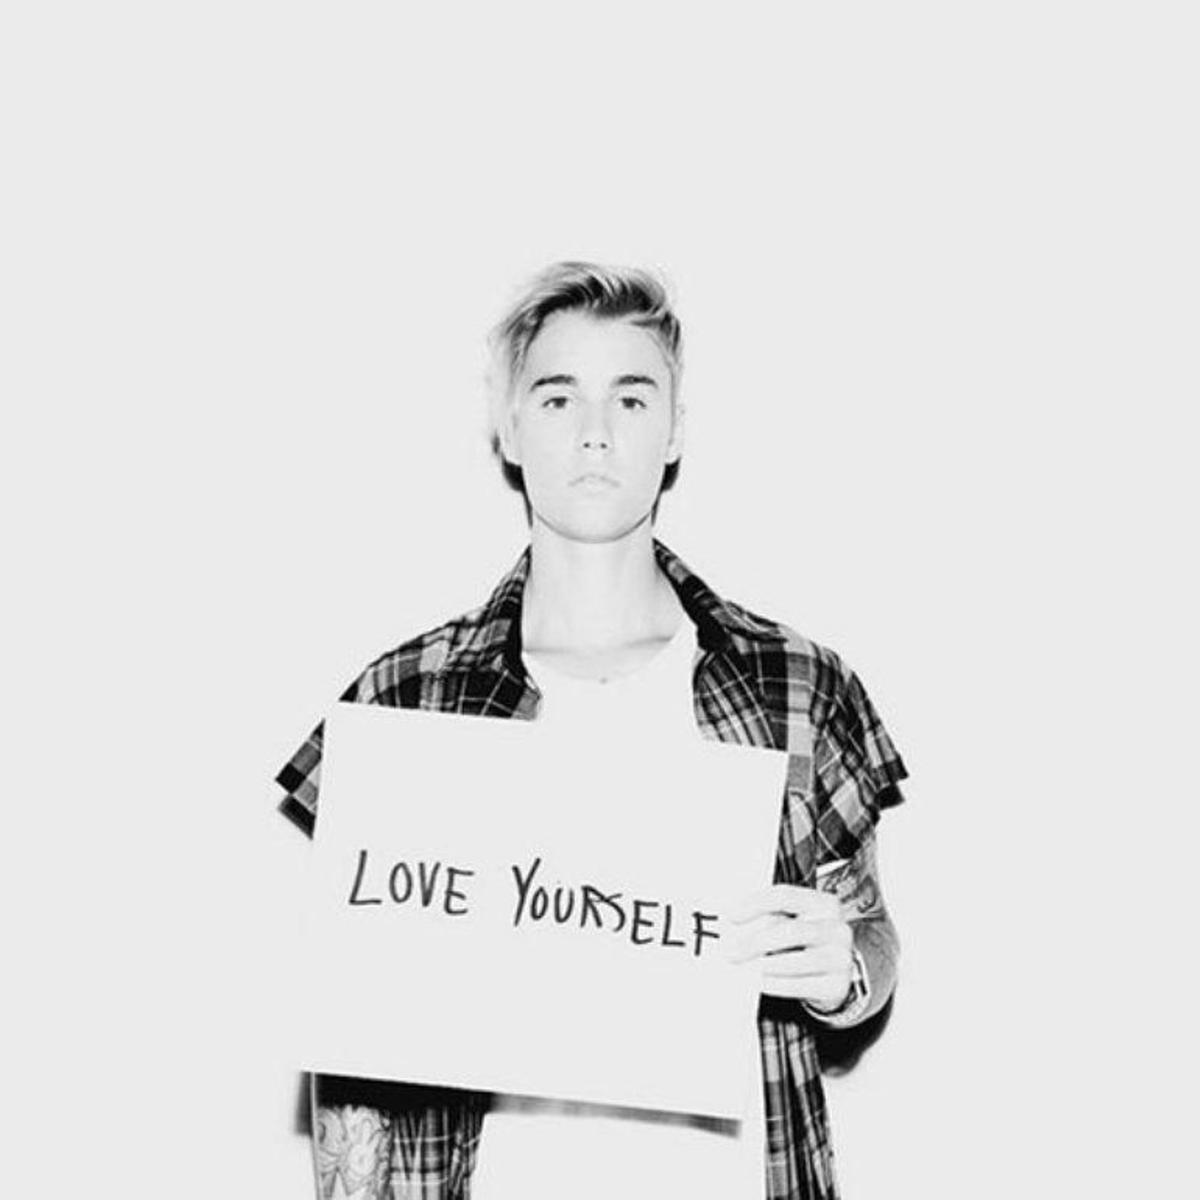 Love yourself, de Justin Bieber